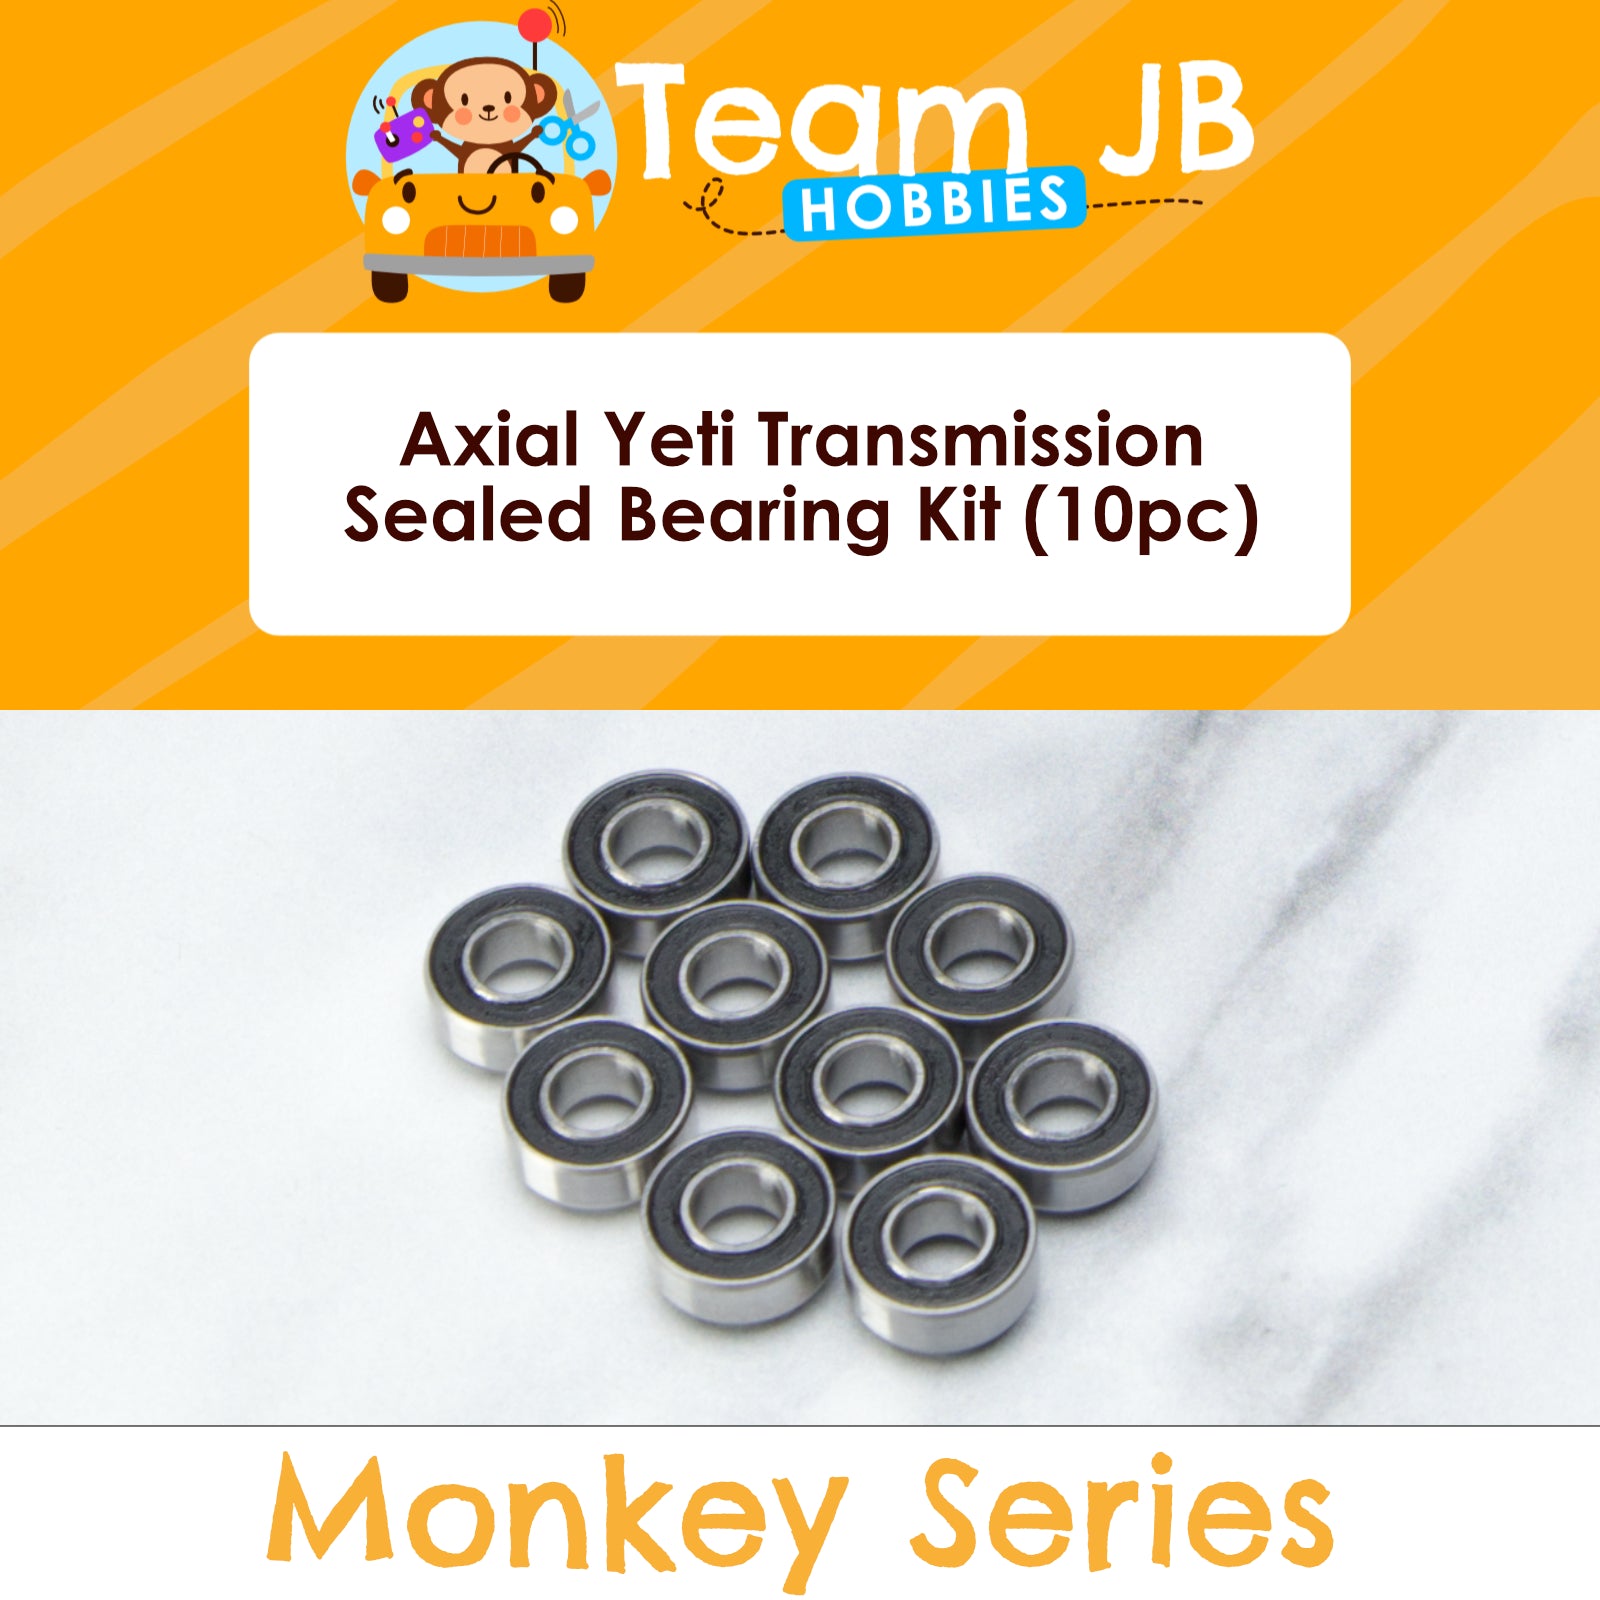 Axial Yeti Transmission - Sealed Bearing Kit